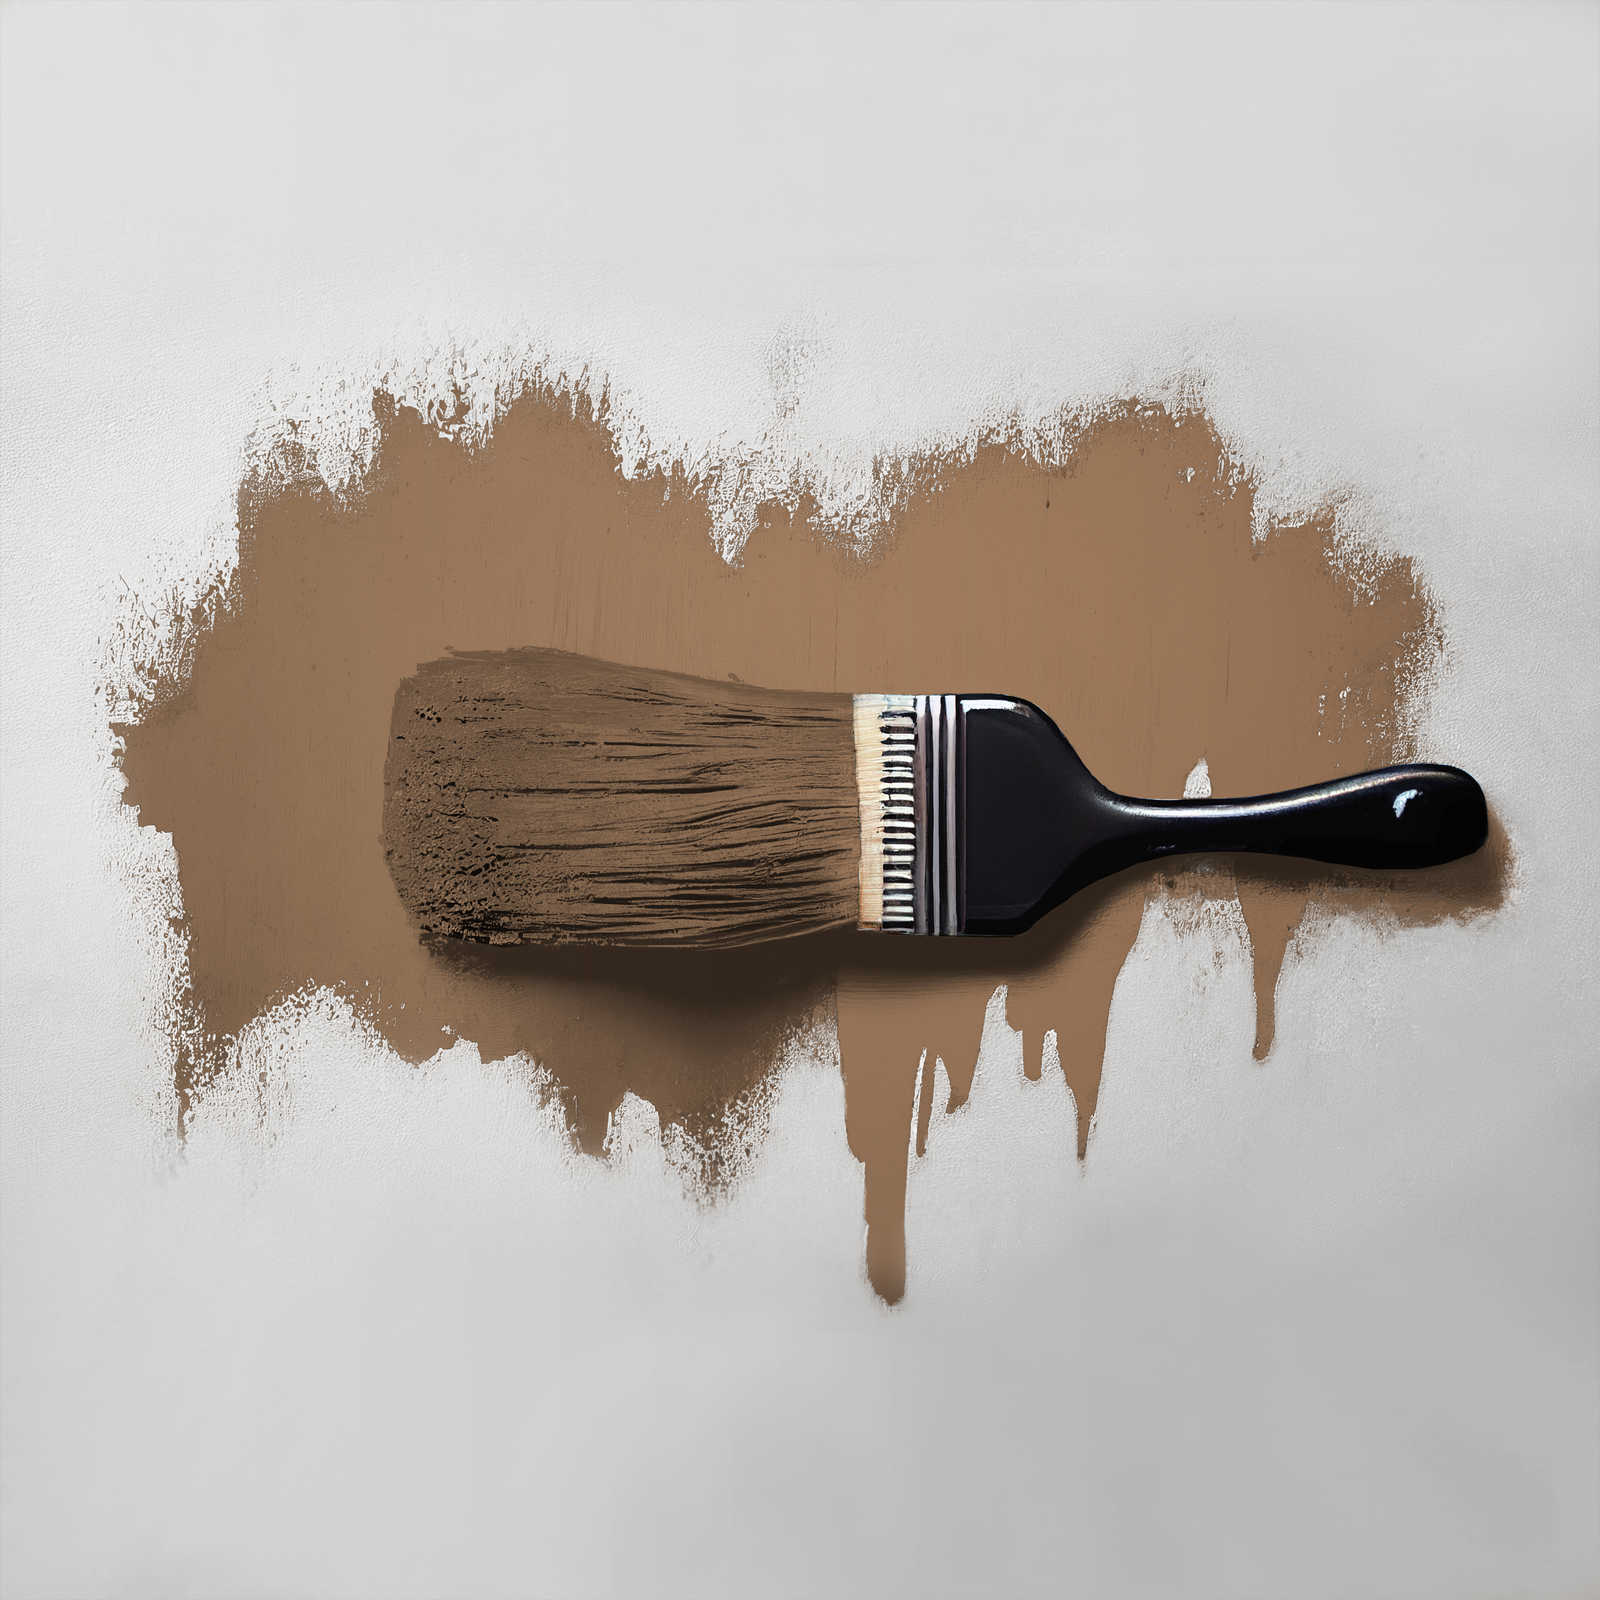             Pittura murale TCK6007 »Awesome Anis« in marrone accogliente – 5,0 litri
        